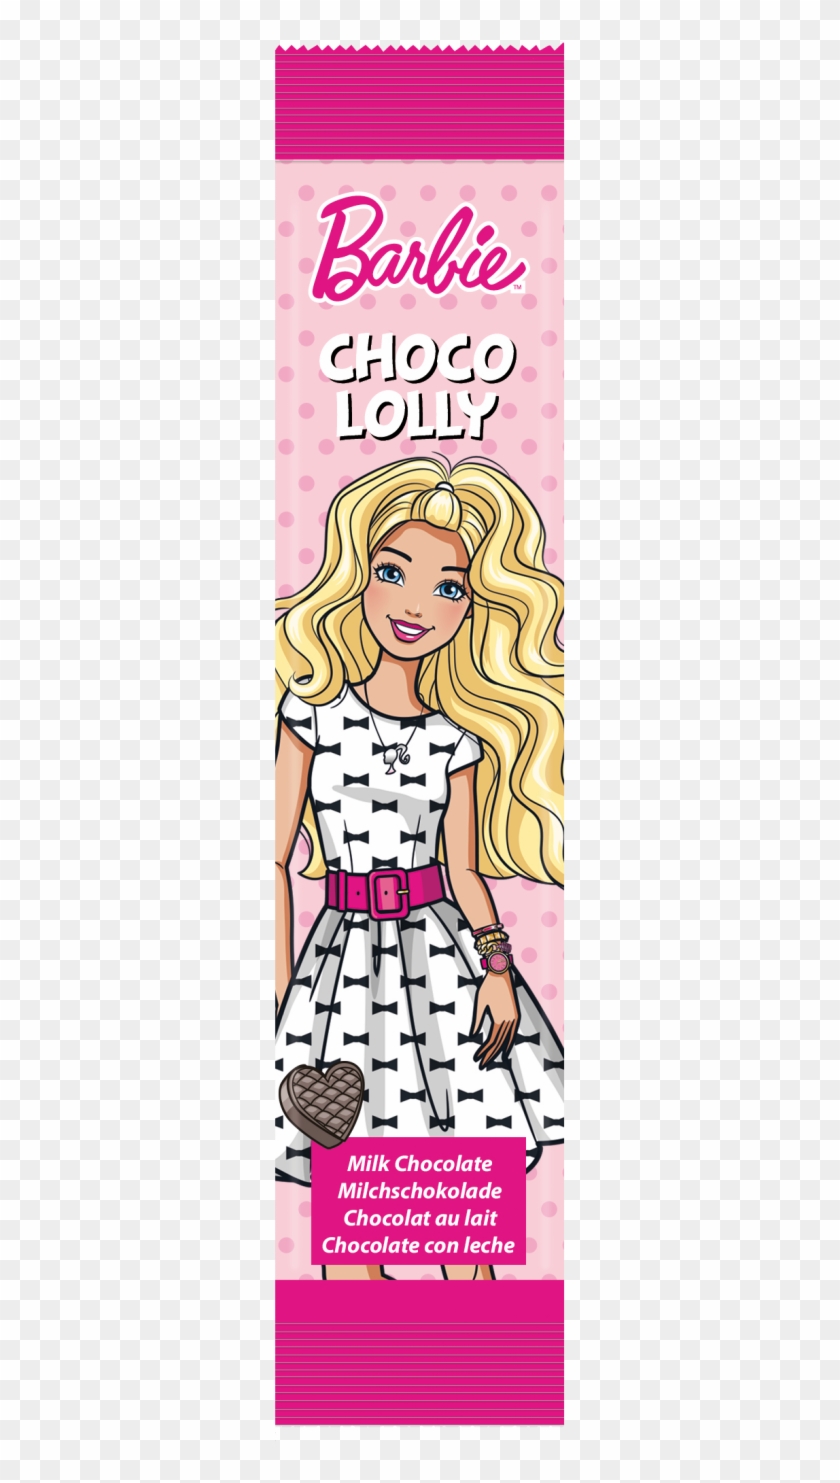 Barbie Choco Lolly - Barbie Clipart #969331